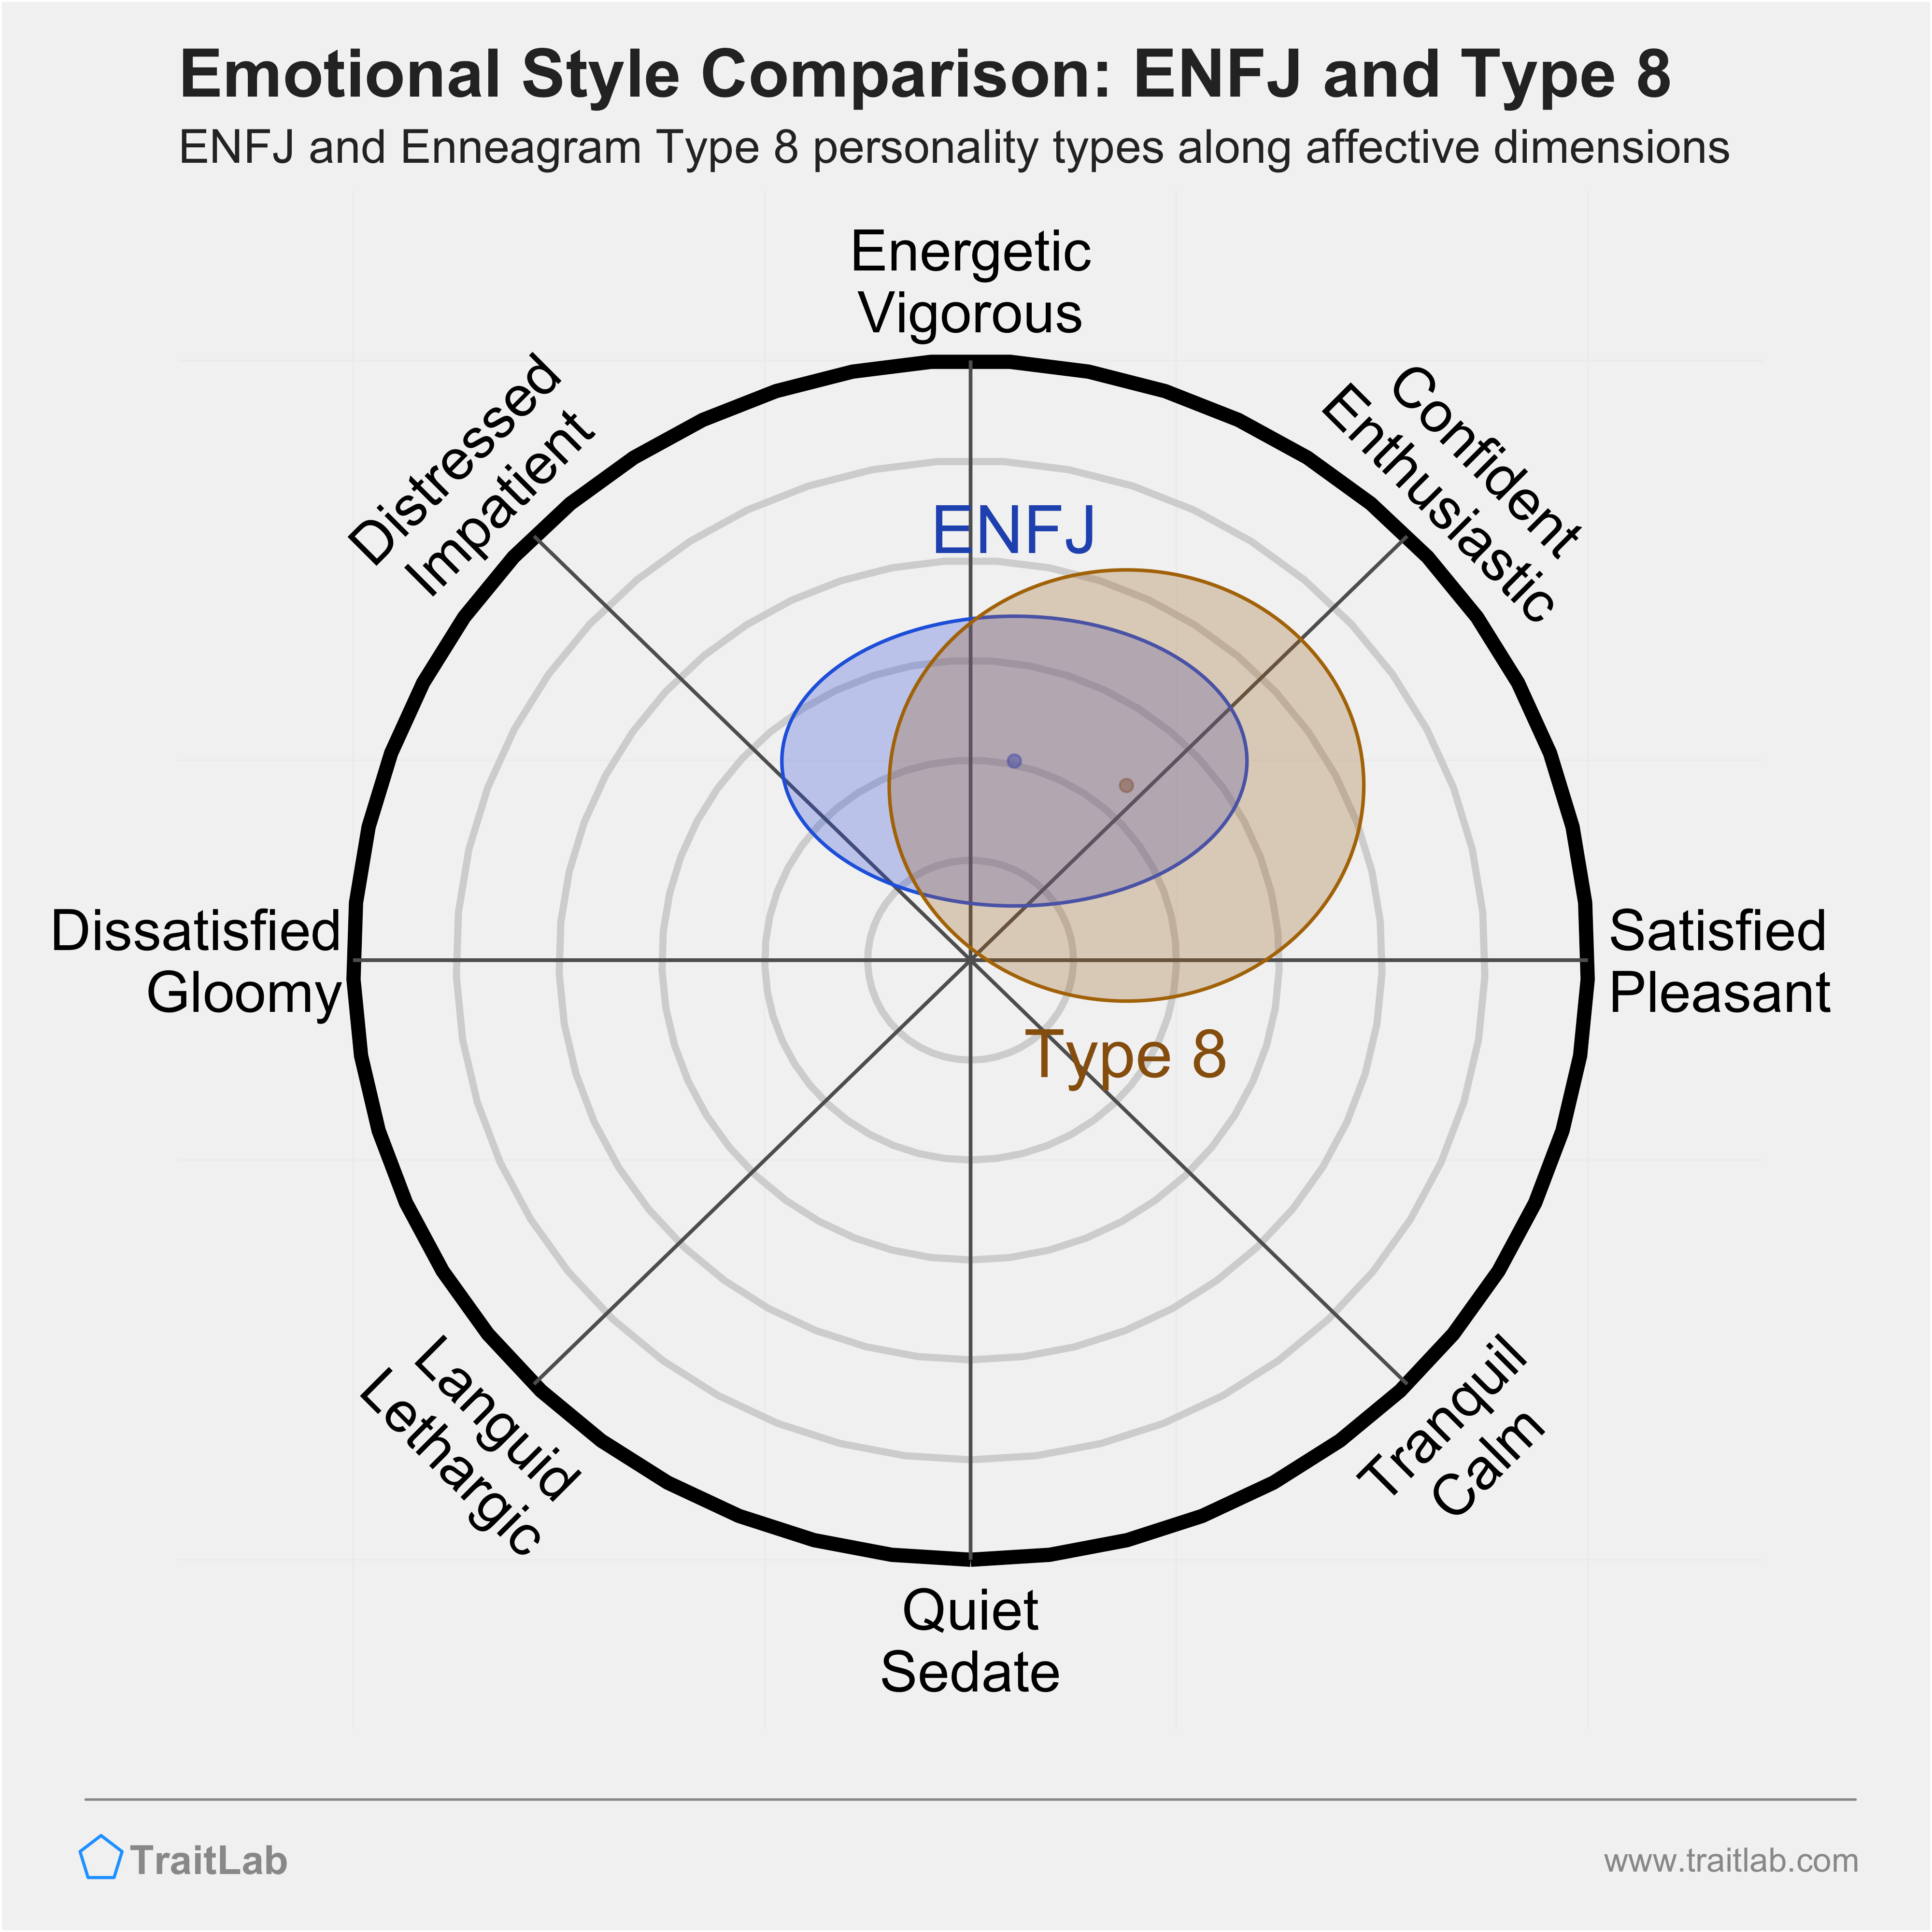 ENFJ and Type 8 comparison across emotional (affective) dimensions